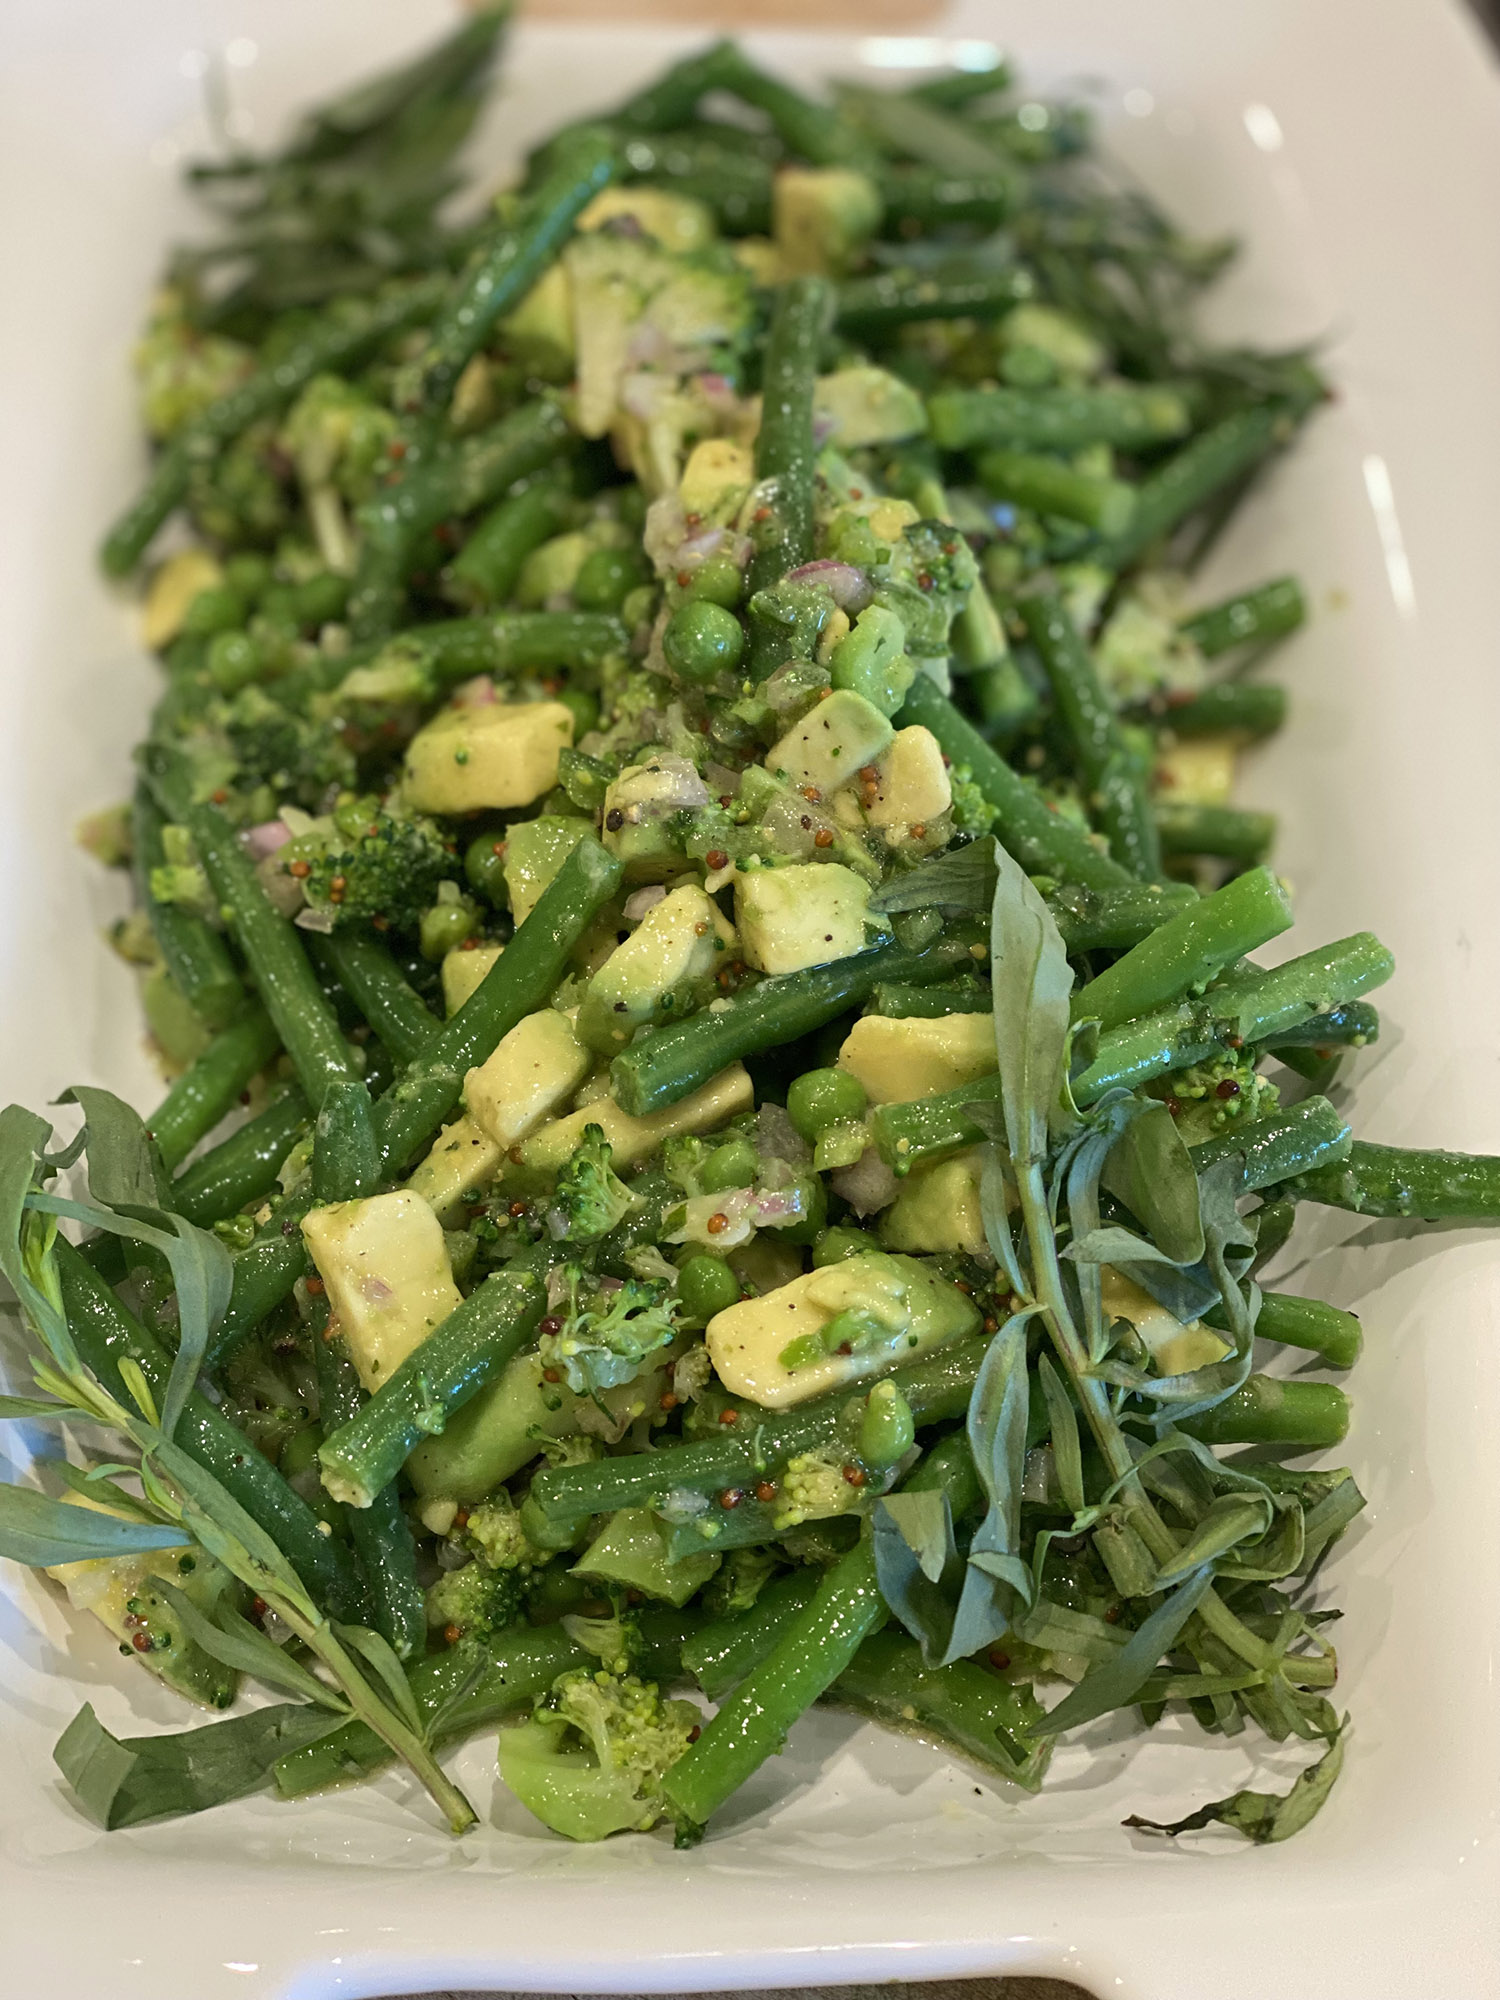 Spring Greens Salad with Avocado, Early Peas and Tarragon-Dijon Vinaigrette by Chef Kai Chase